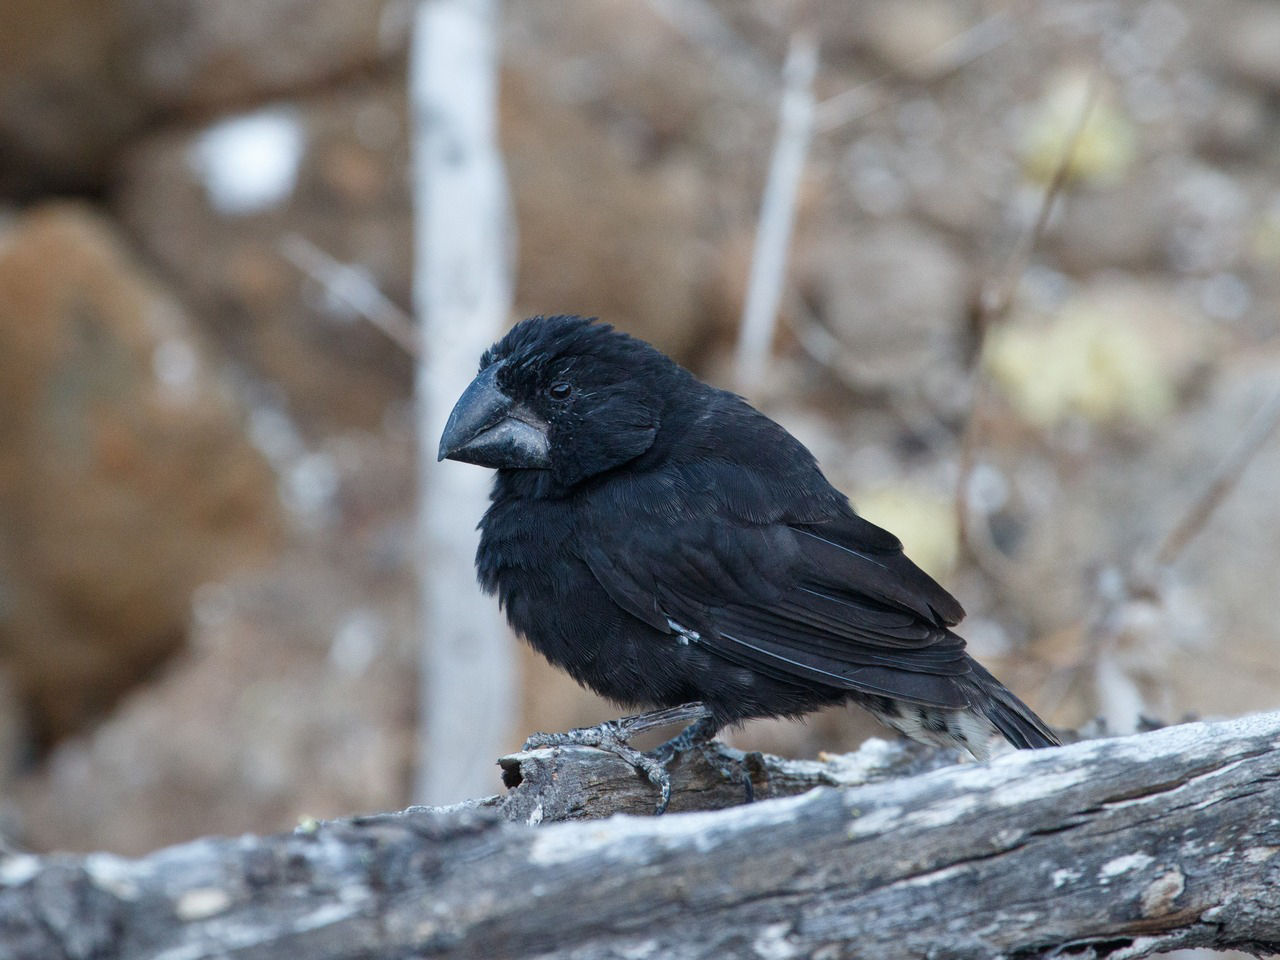 A large, black finch with a big beak sits on a log.